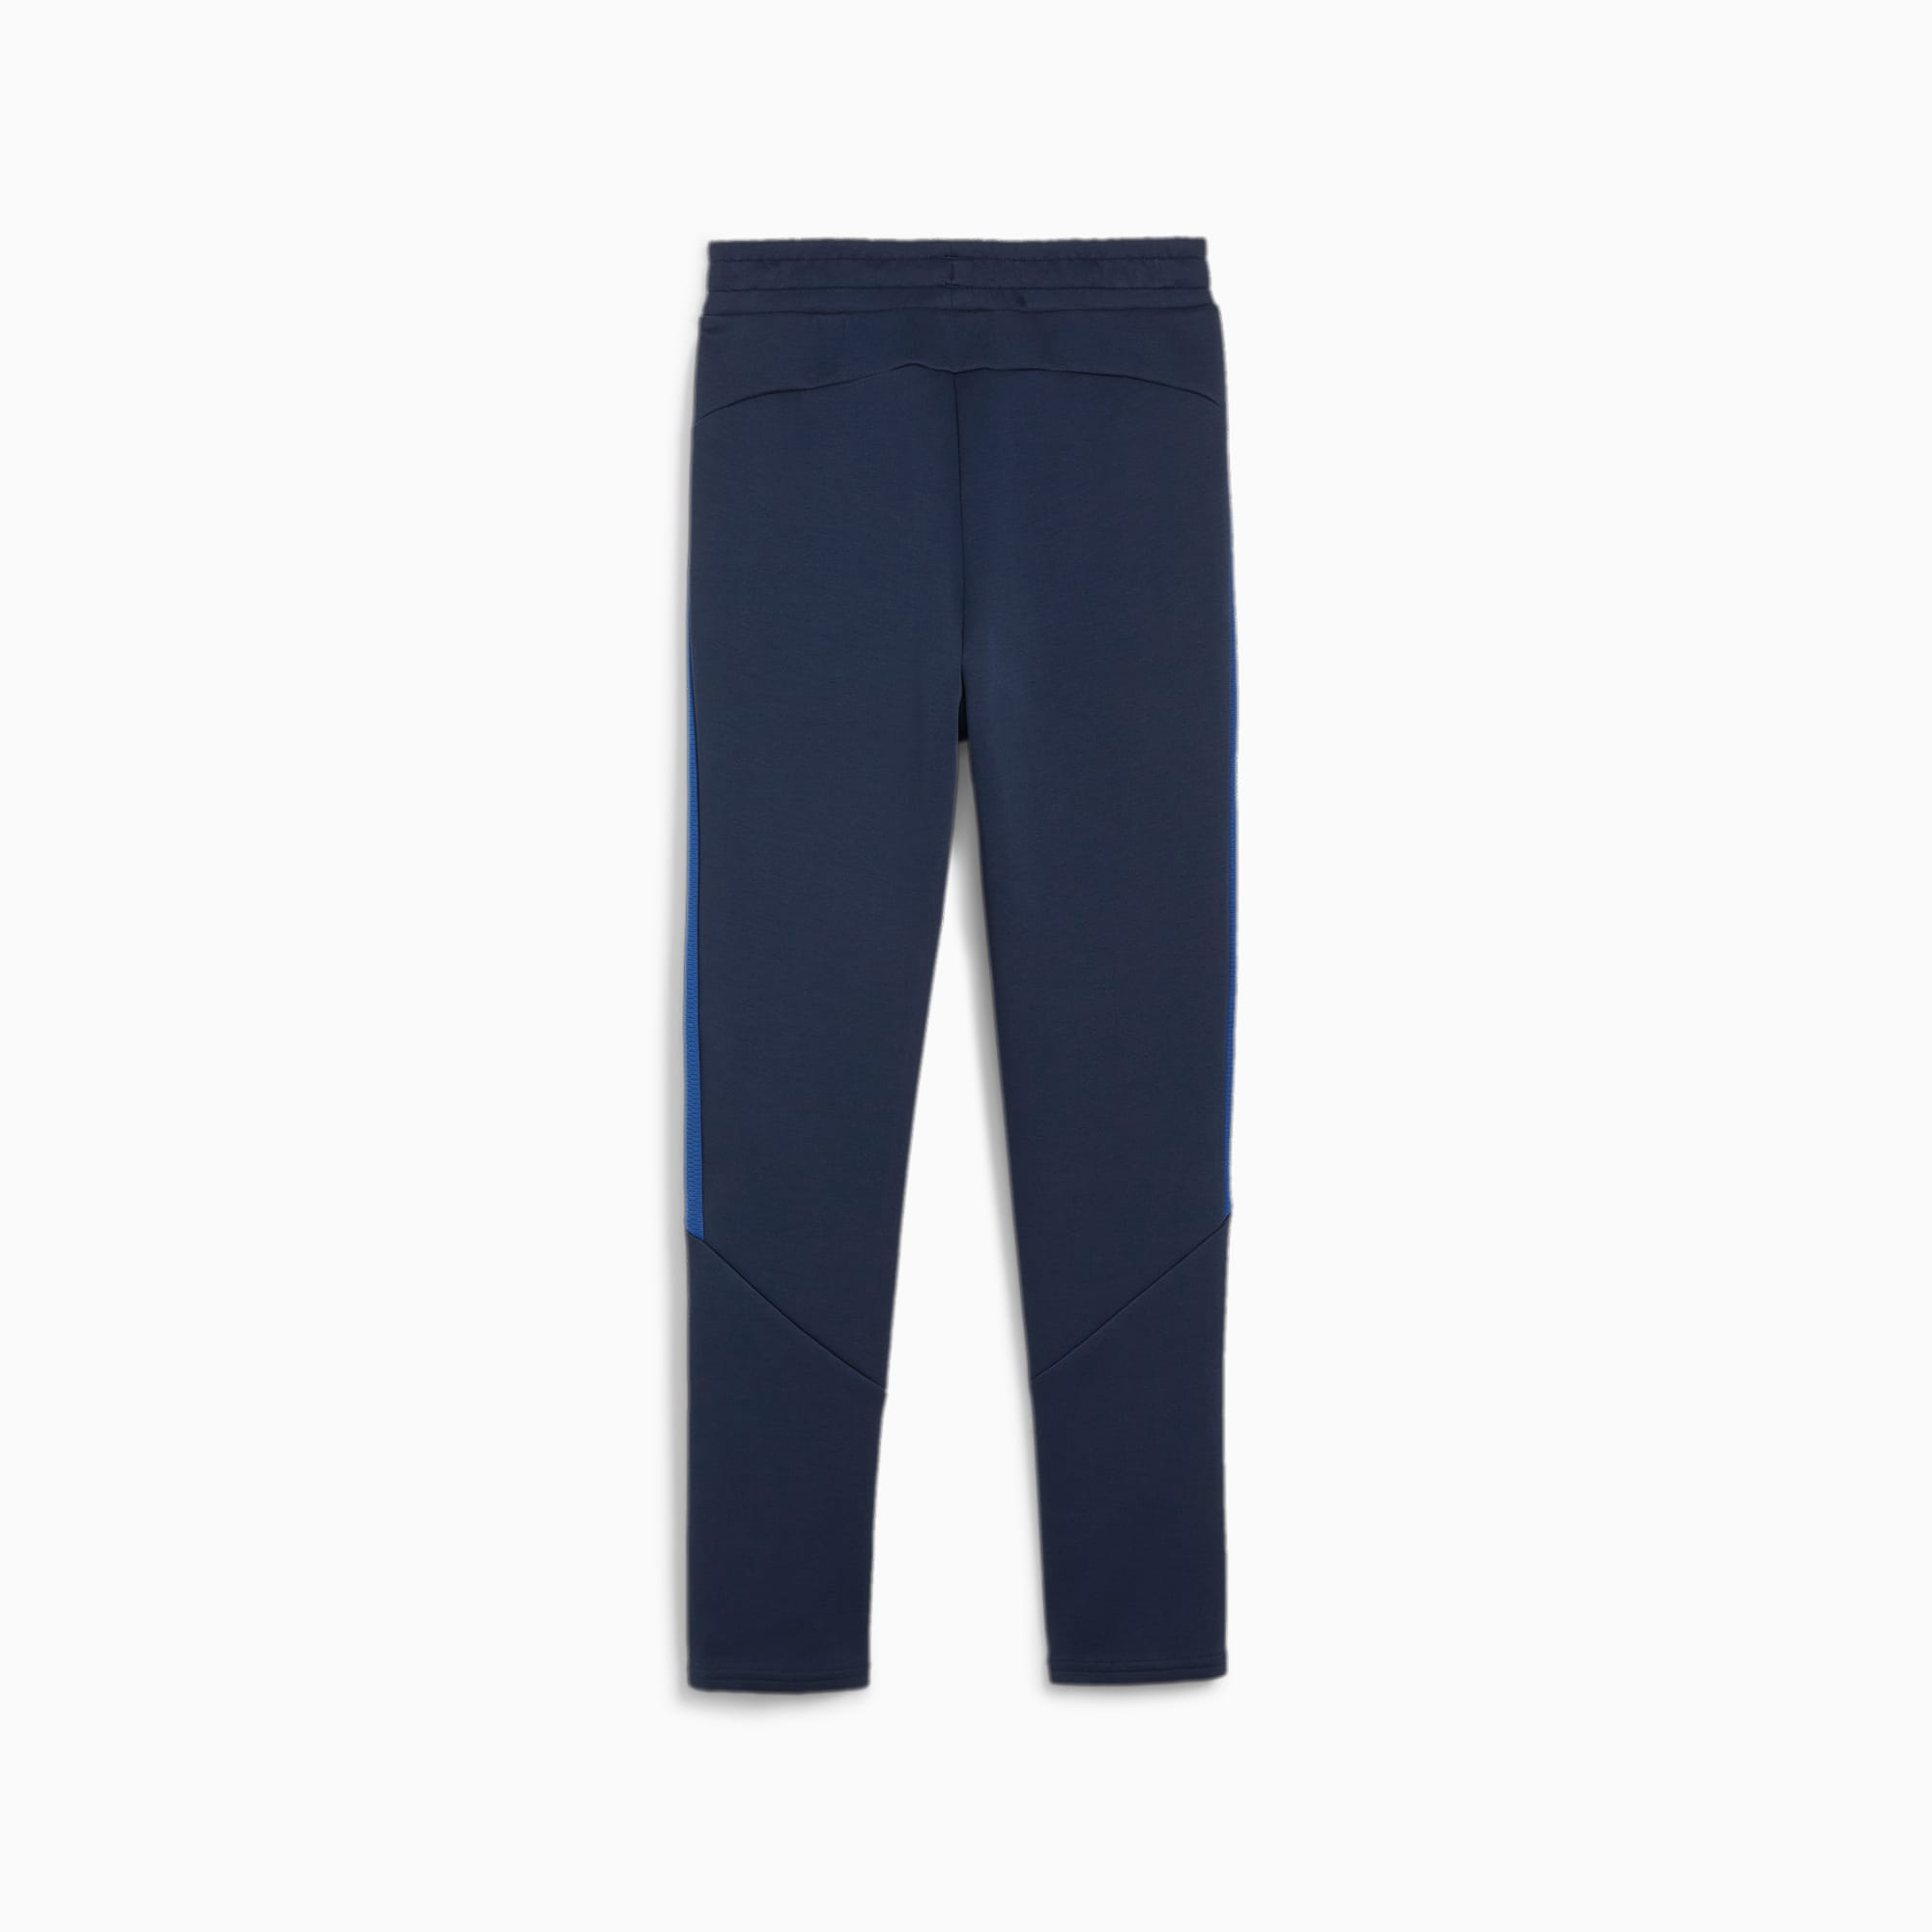 PUMA Evostripe Youth Sweatpants, Dark Blue, Size 116, Clothing